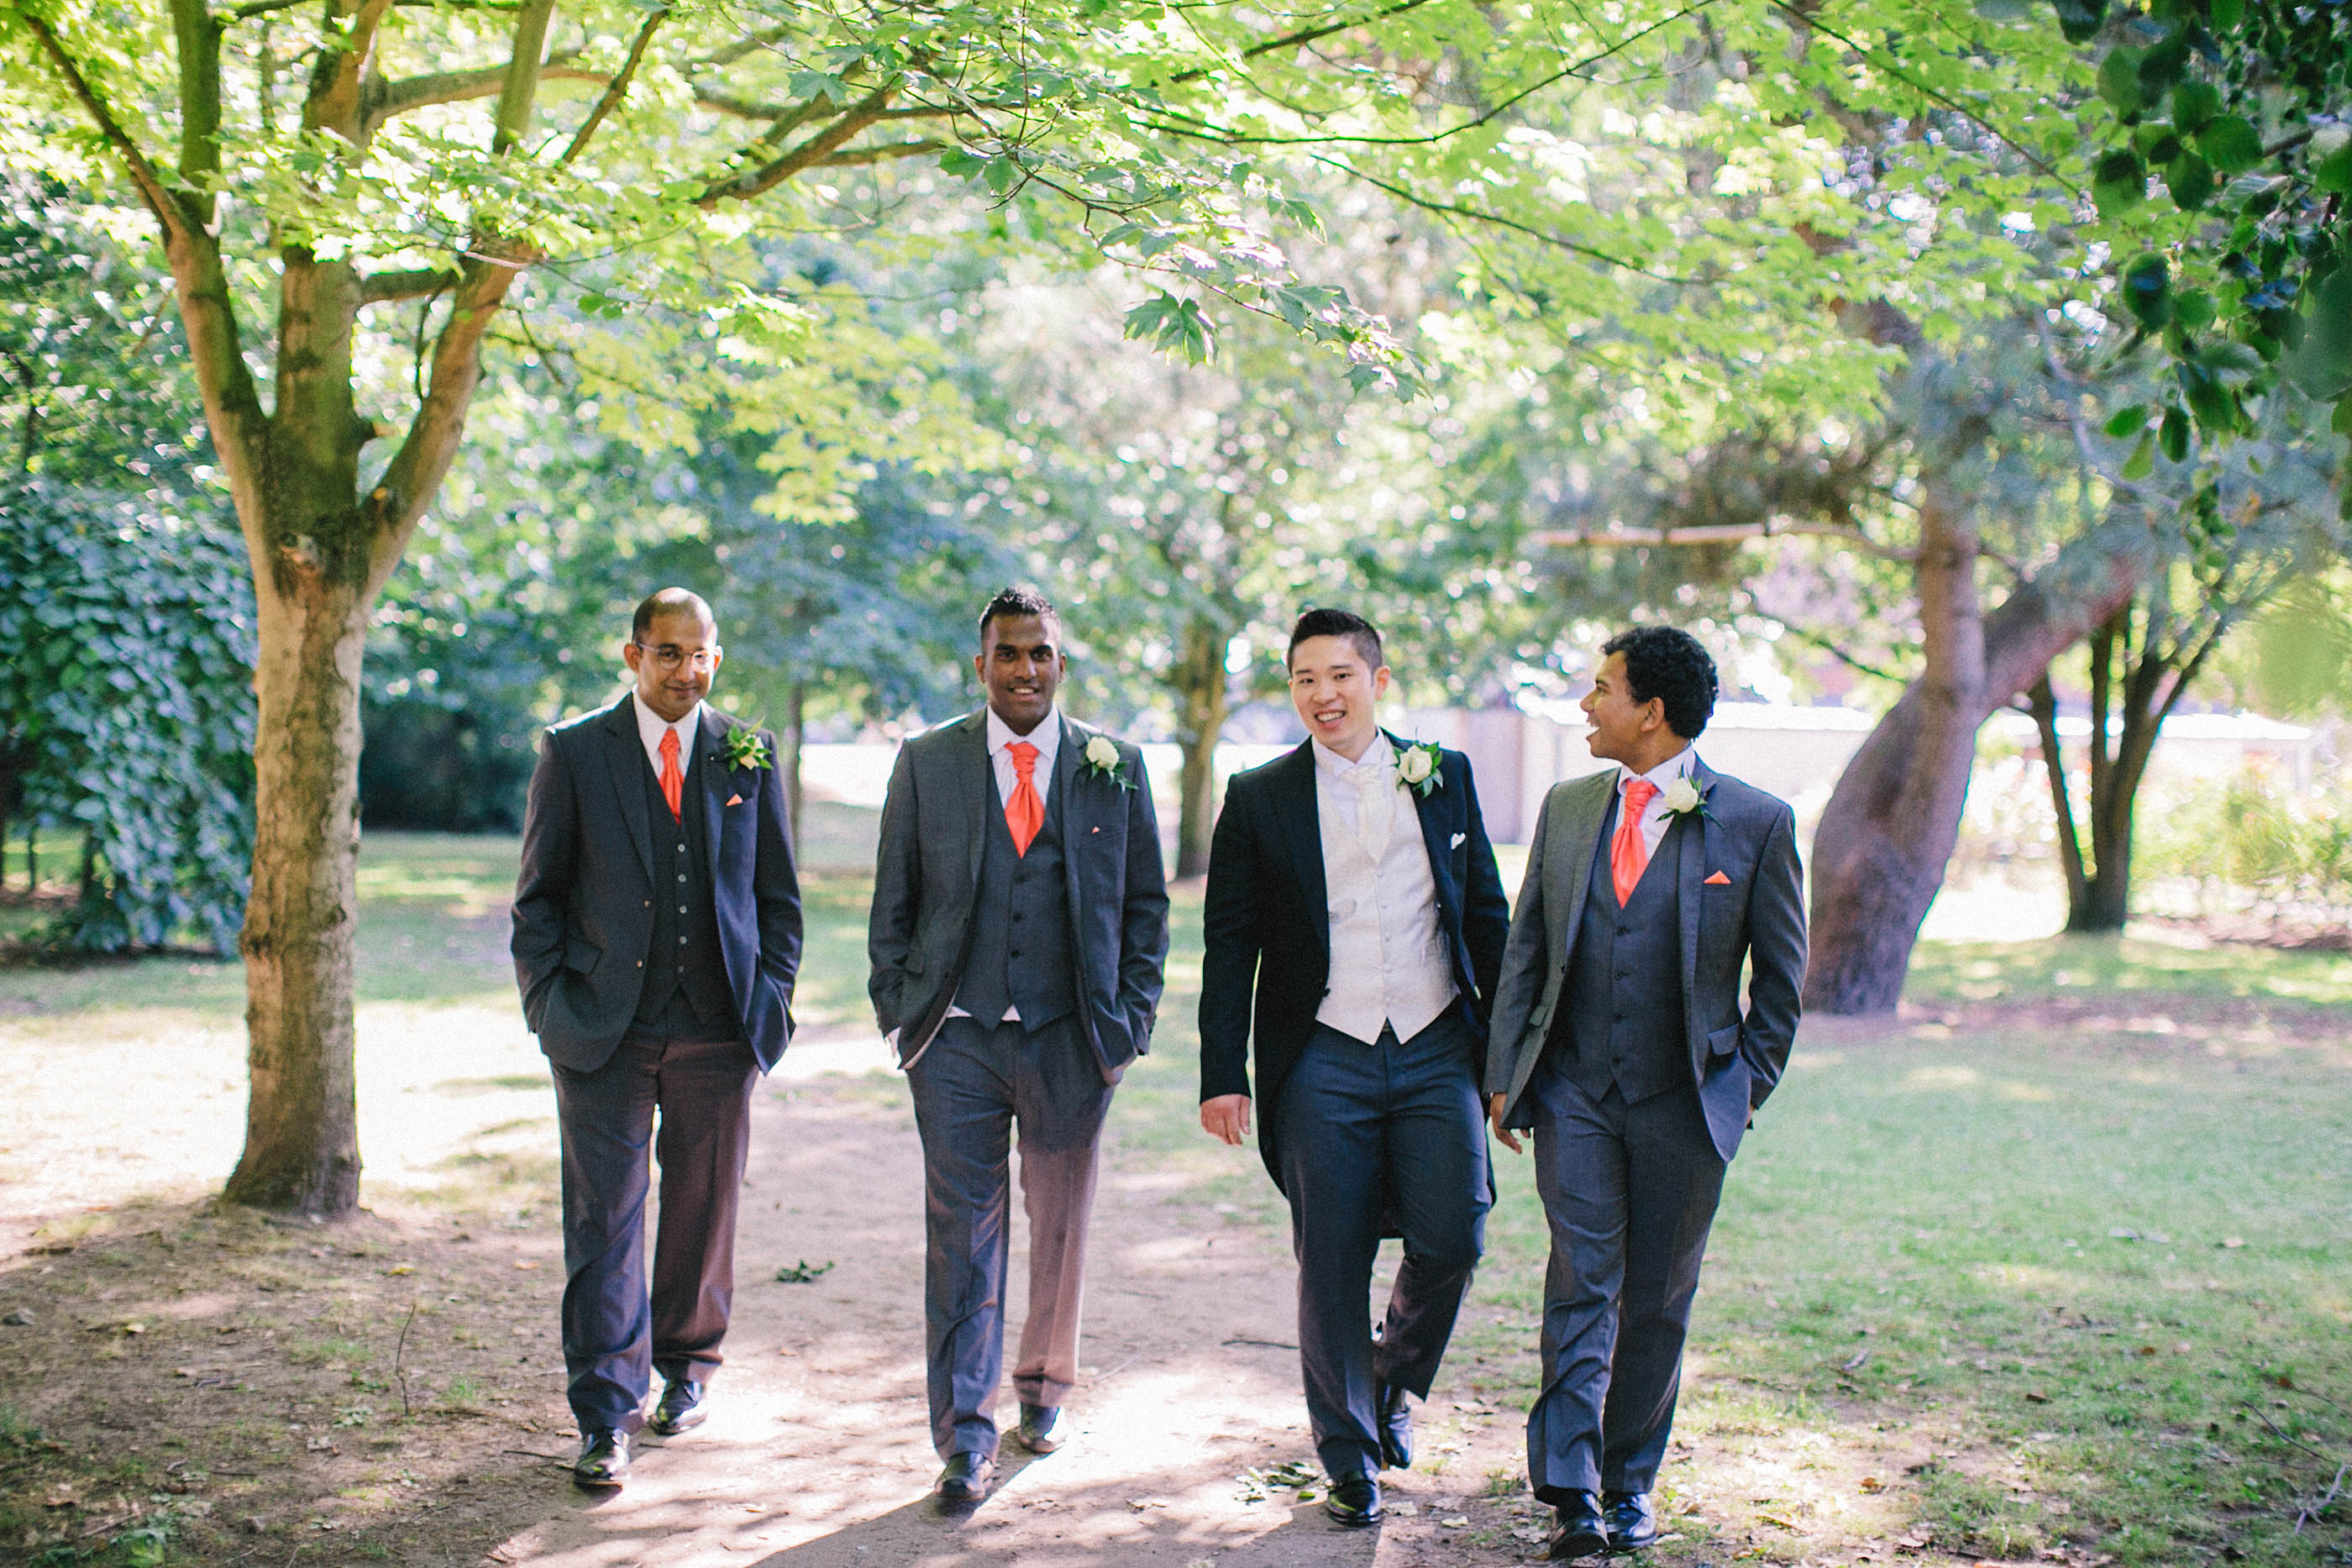 nicholas-lau-photo-photography-fine-art-film-wedding-london-asian-chinese-uk-mulitcultural-ceremony-reception-groom-groomsmen-tuxedos-suits-walking